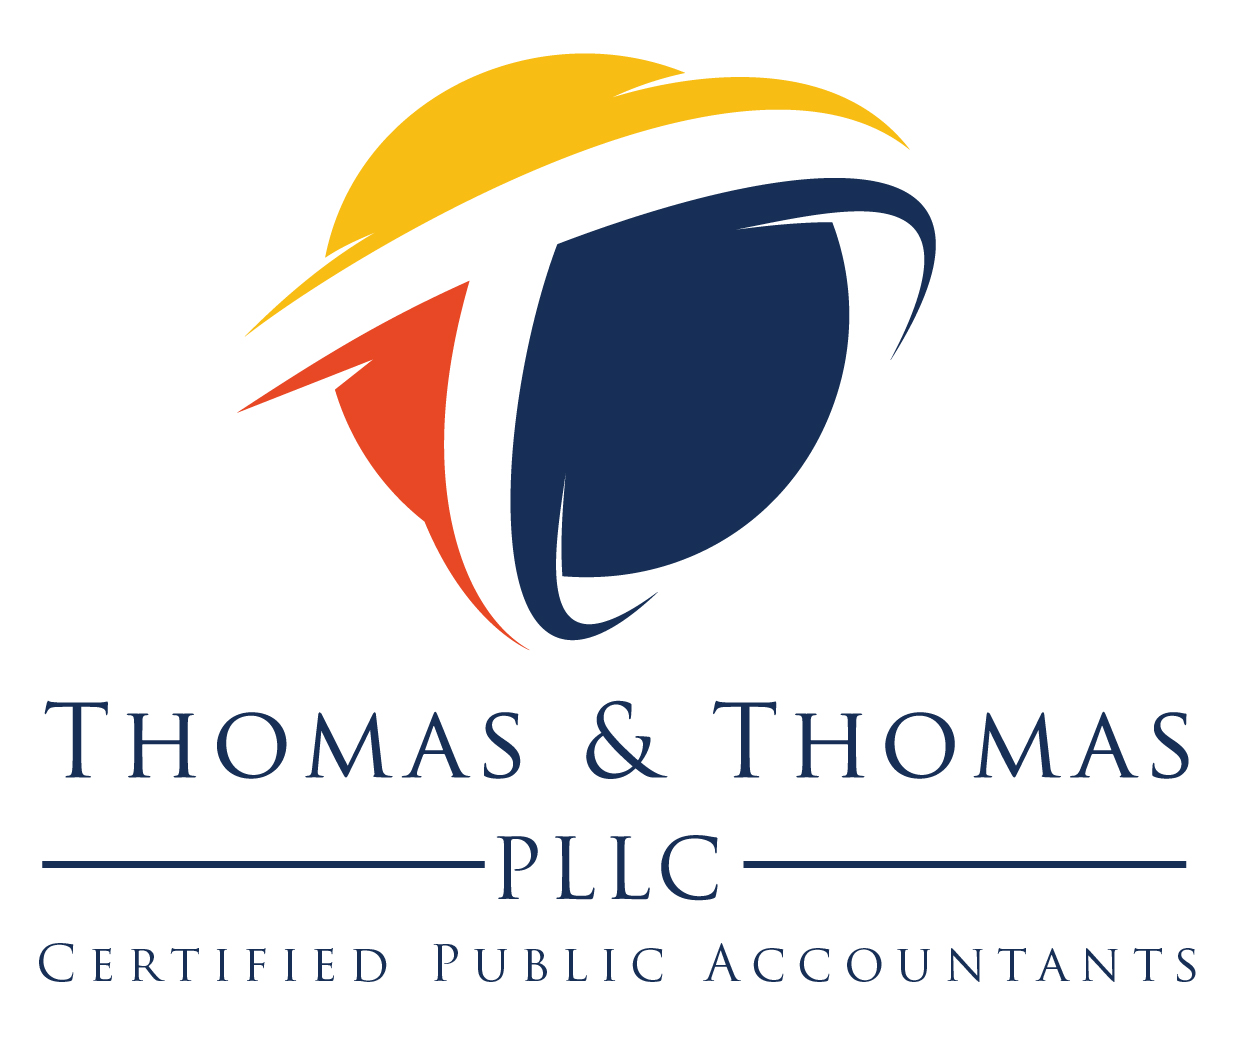 Thomas & Thomas PLLC - Certified Public Accountants